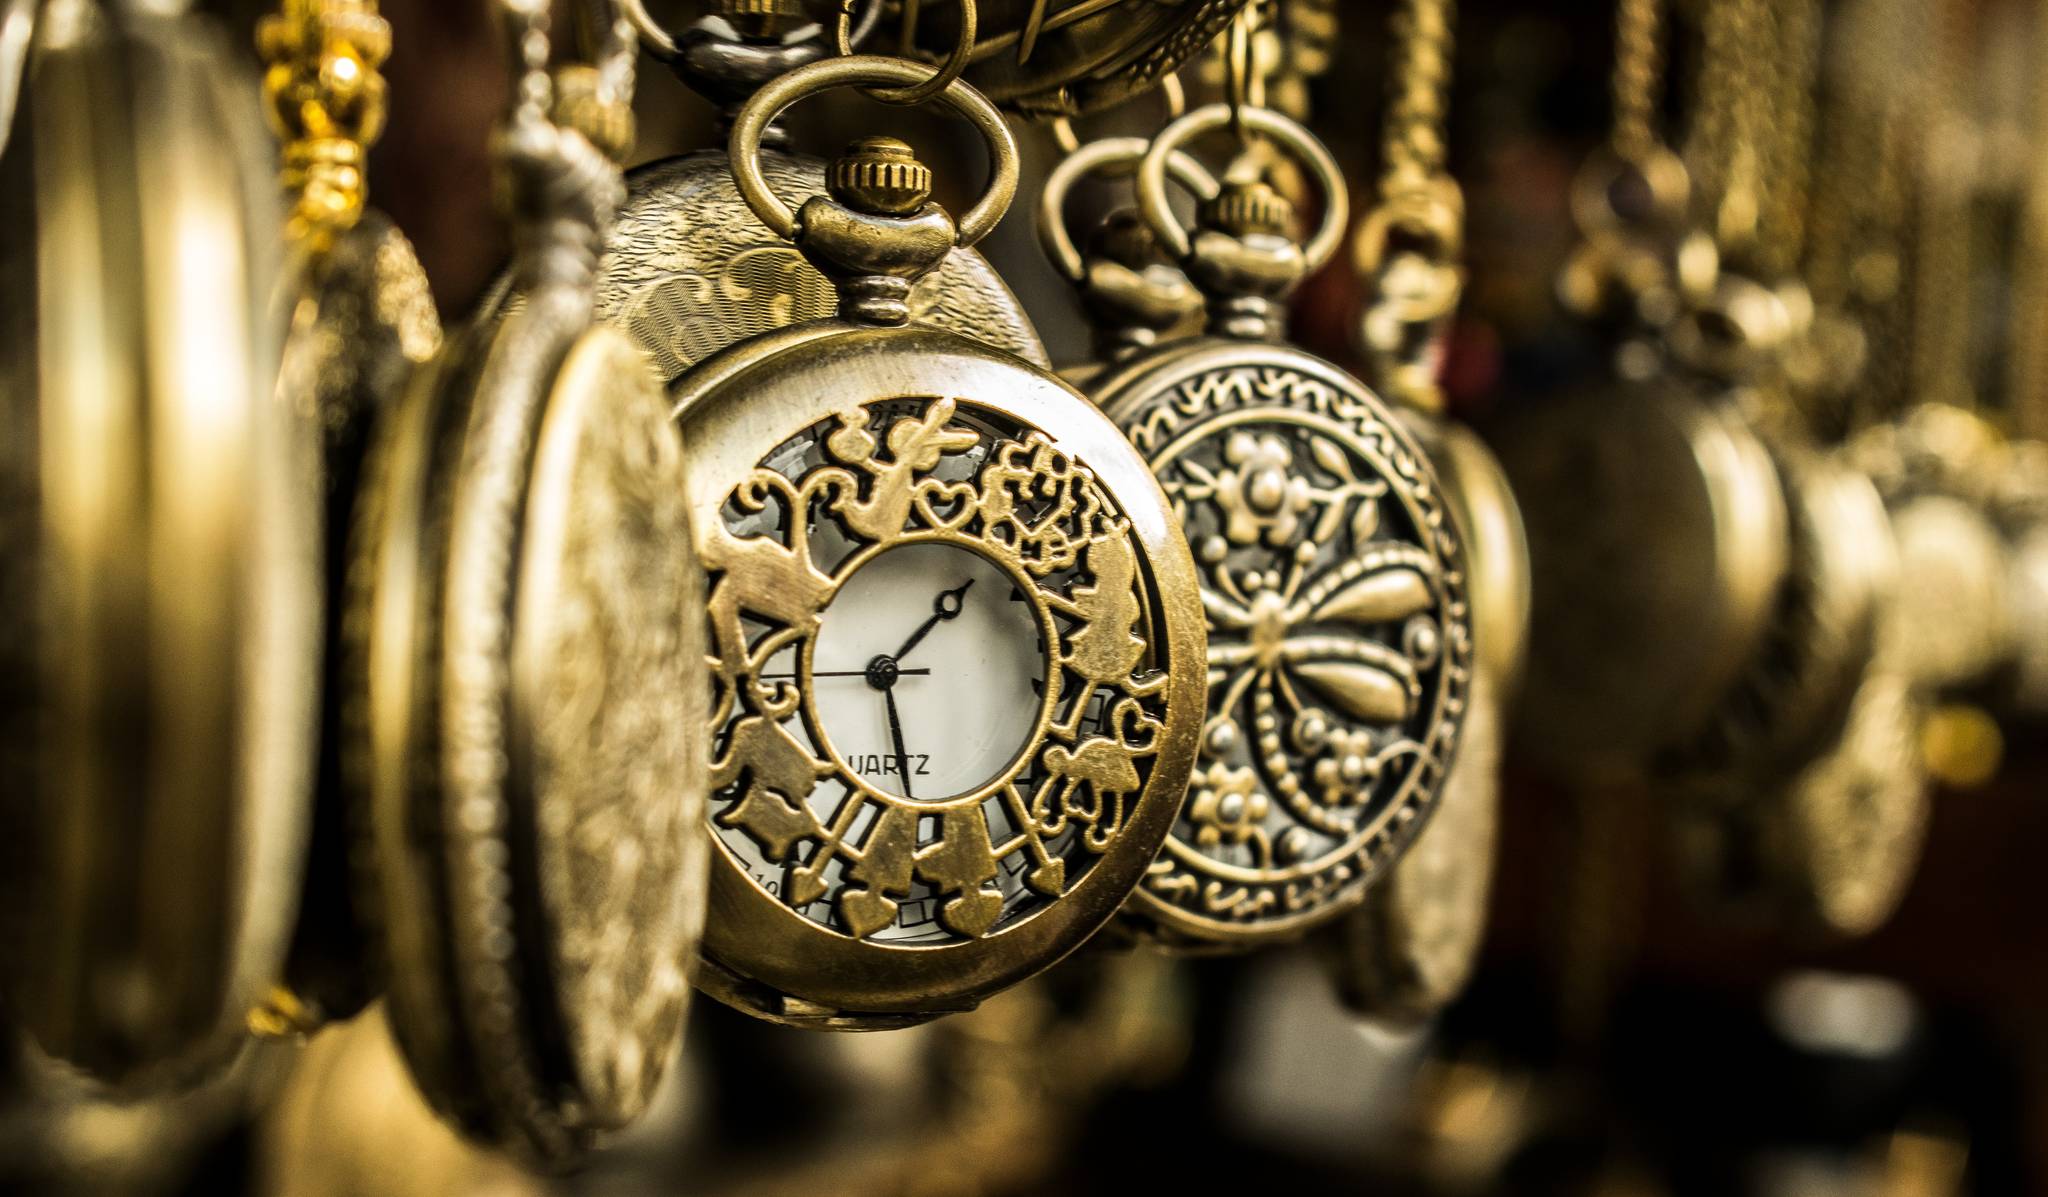 Breguet's artful timepieces shine at Frieze New York